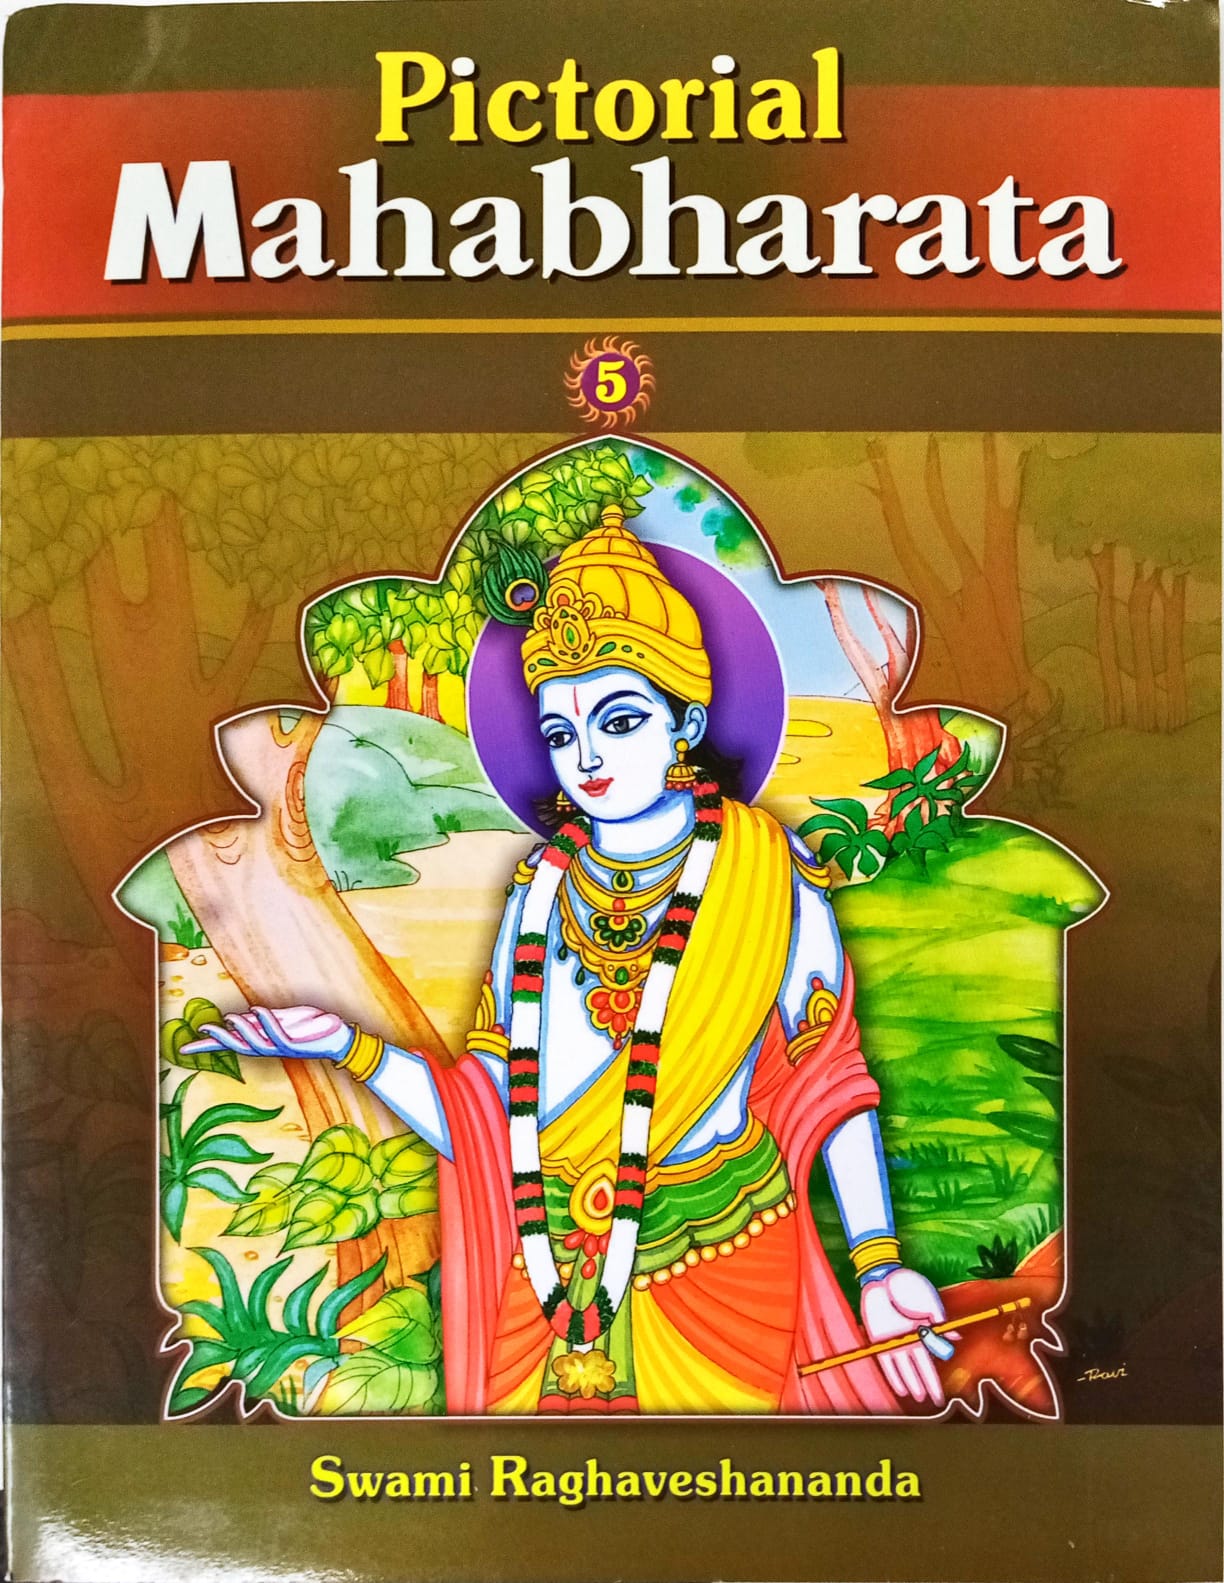 Pictorial Mahabharata - 5